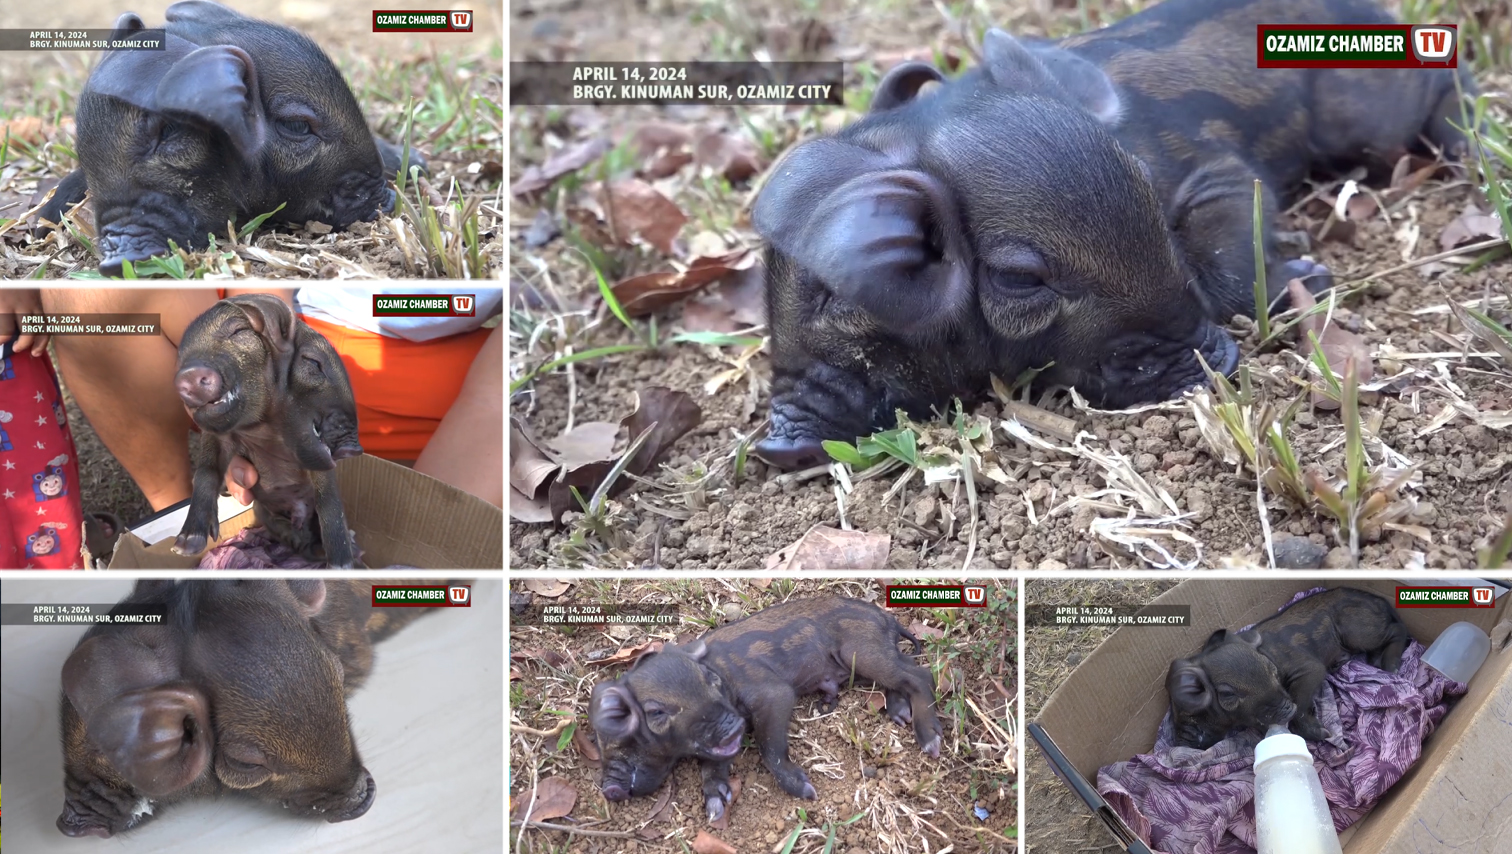 VIDEO WATCH: 2-headed piglet born in Ozamiz